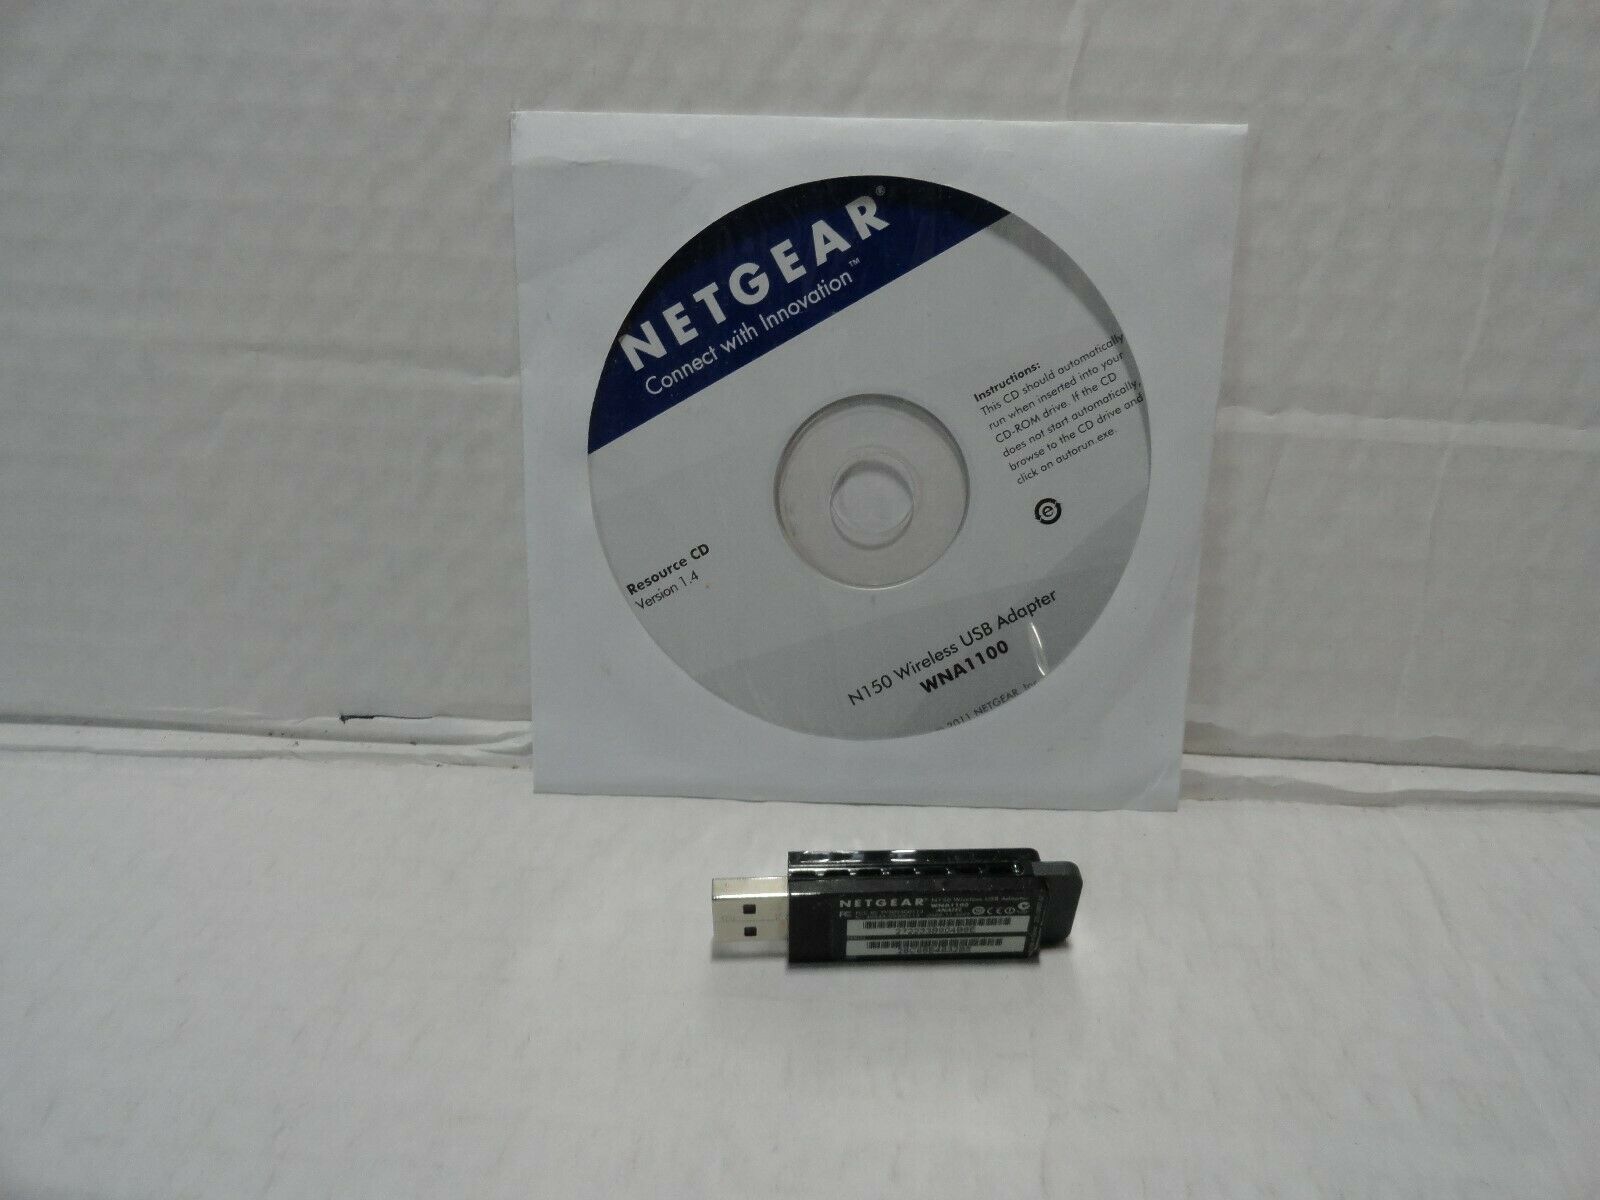 Netgear n150 wireless usb adapter wna1100 user manual